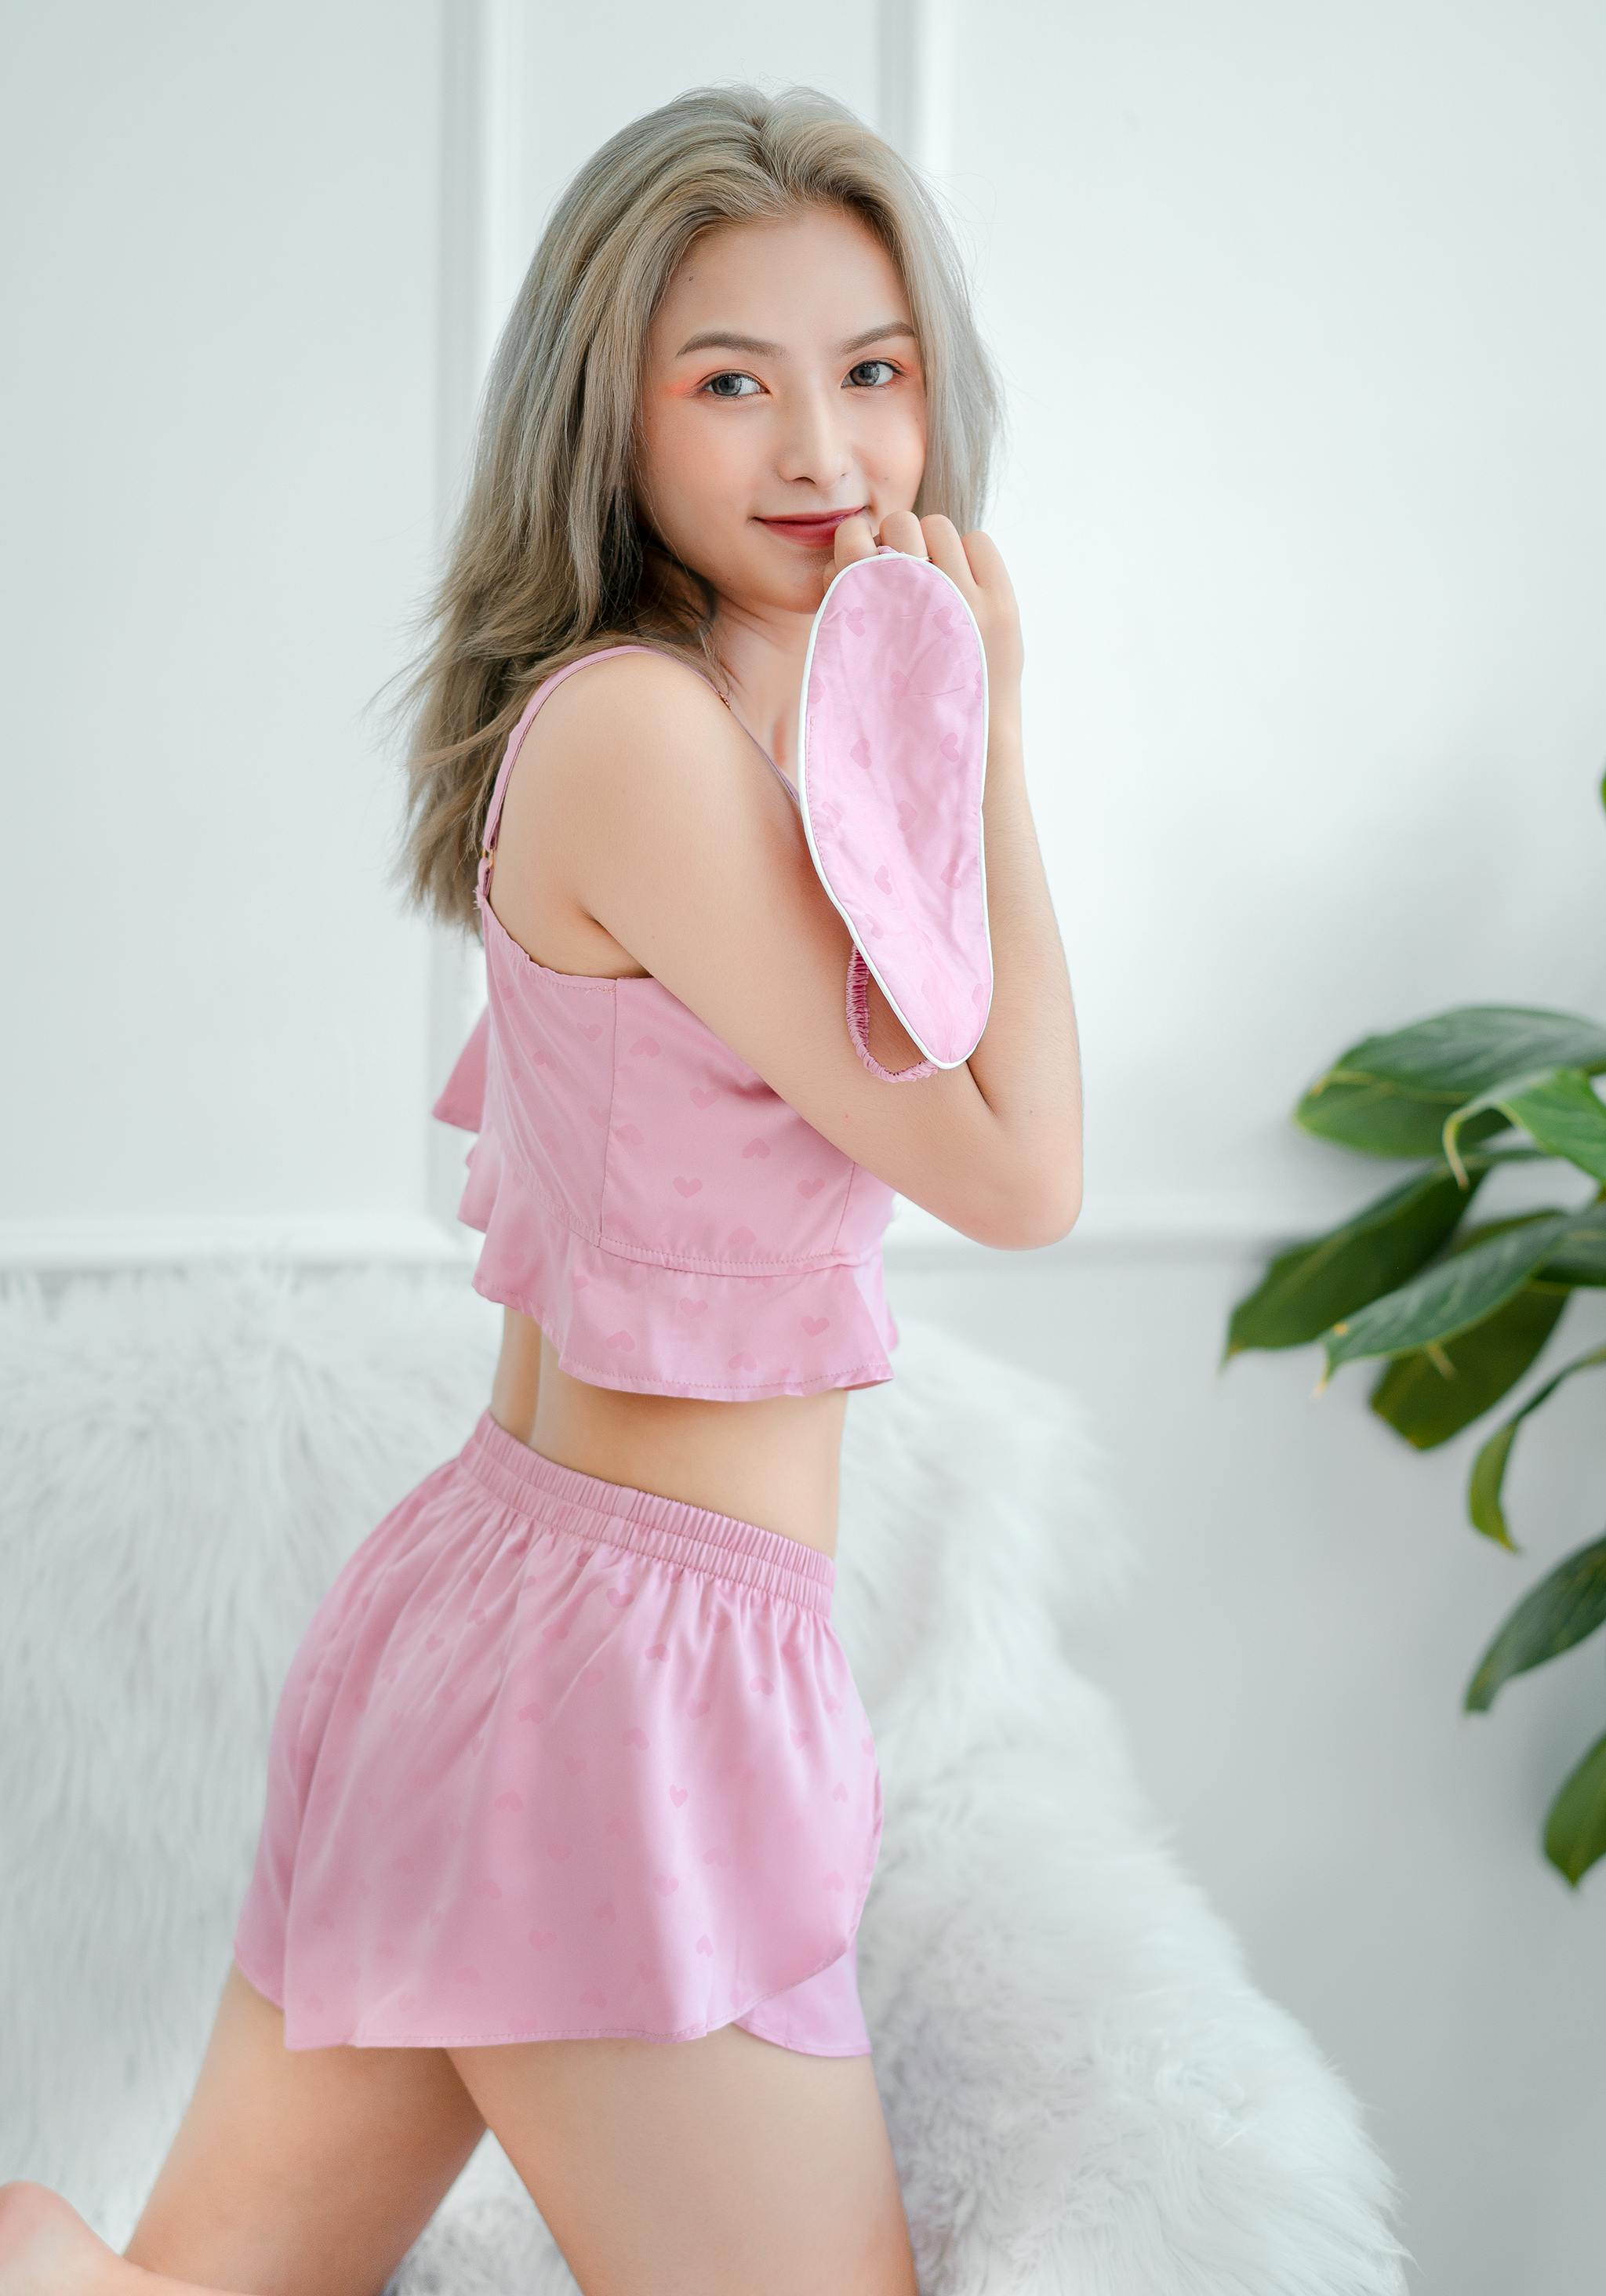 Pre Nn Porn - Cute woman in pajamas at home Â· Free Stock Photo